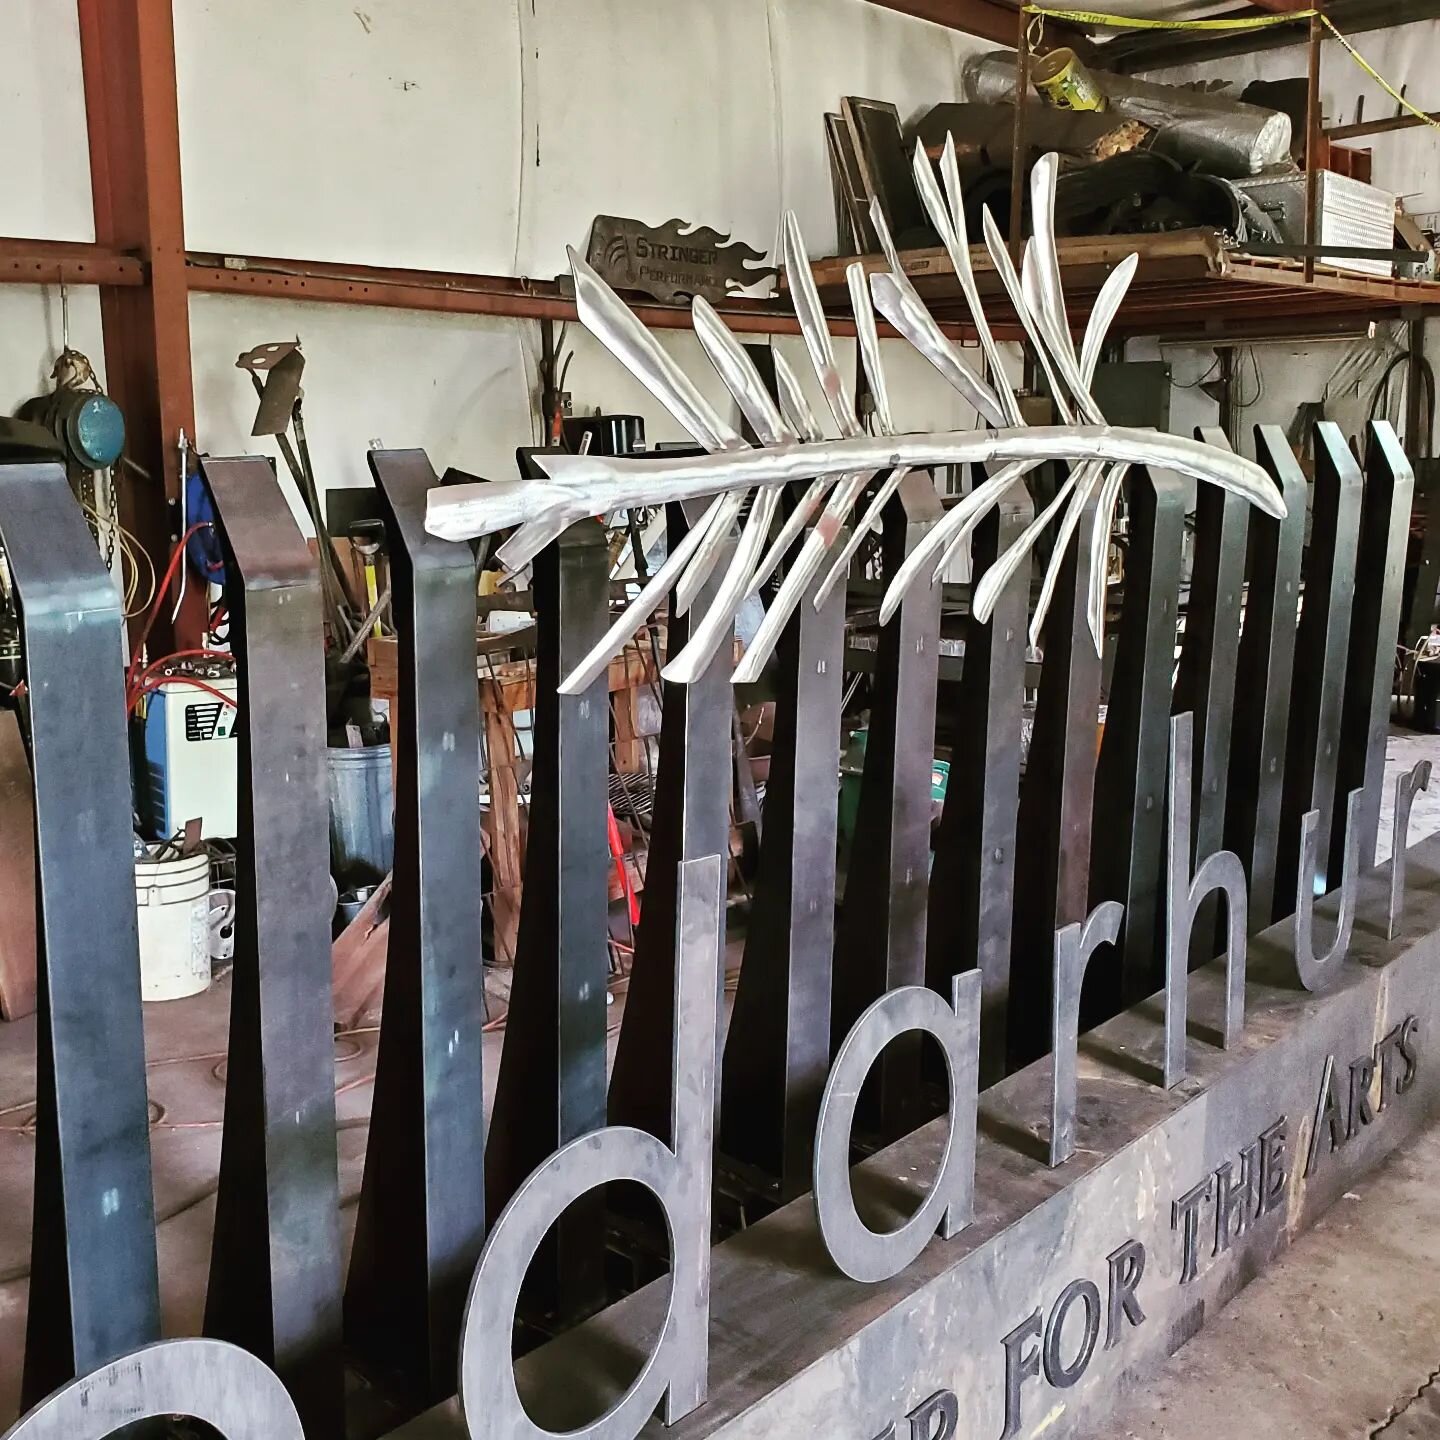 Sneak peak of a big sign project I've been working on. Next steps powder coat then install =) 

#metalwork #blacksmith #fabrication #design #sign #metal #welding #steel